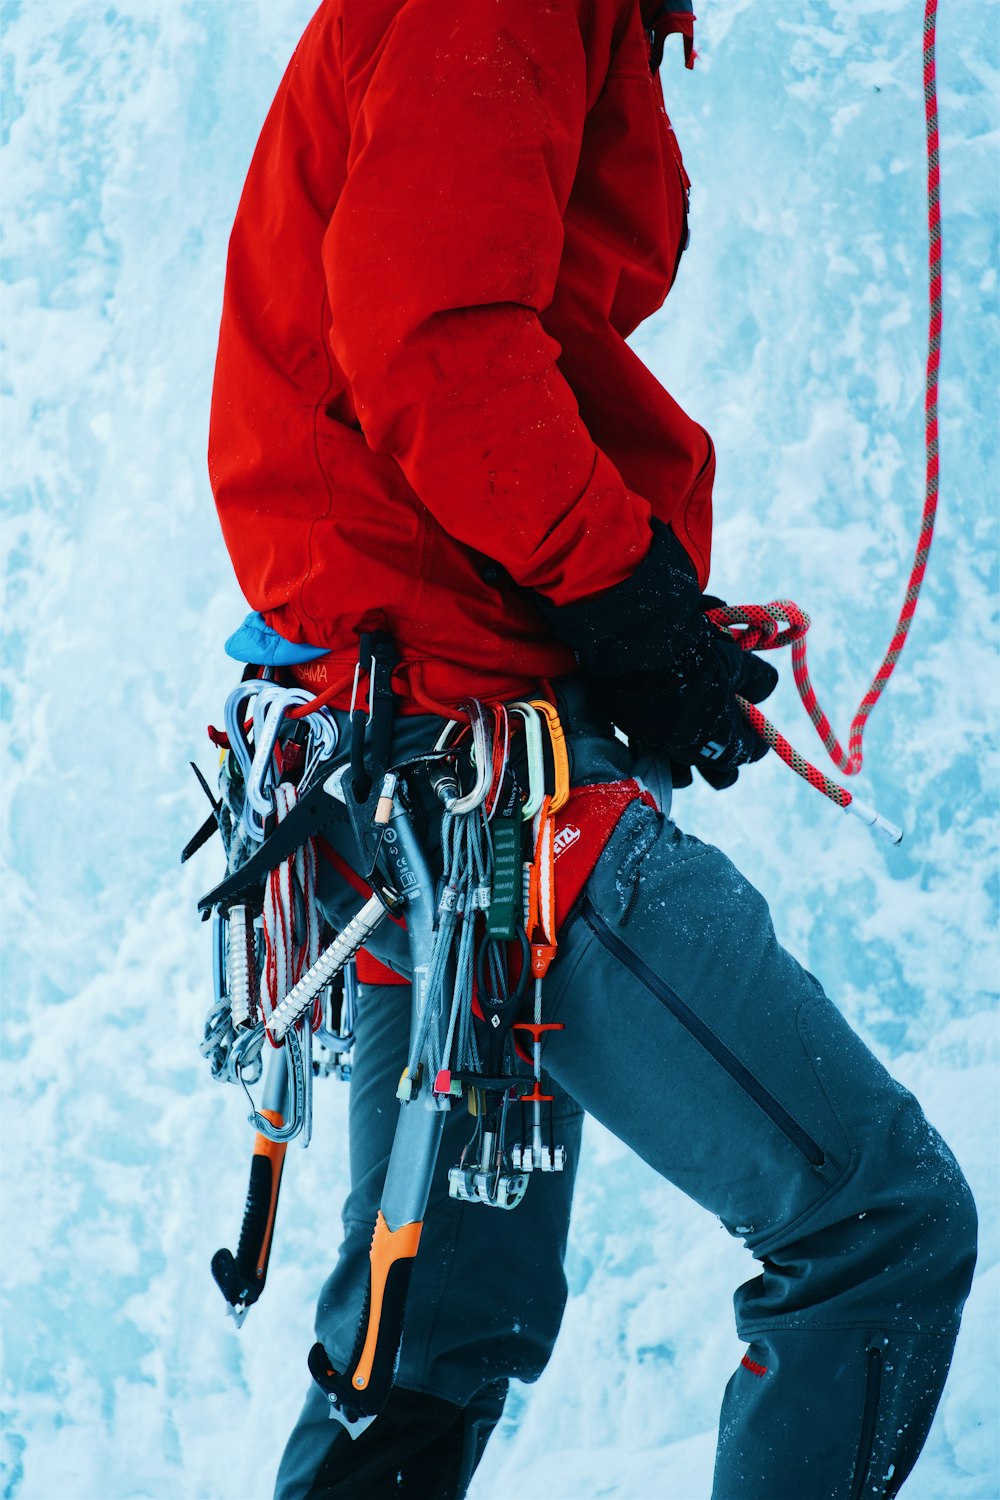 Man setting up hiking belt photo – Free Person Image on Unsplash